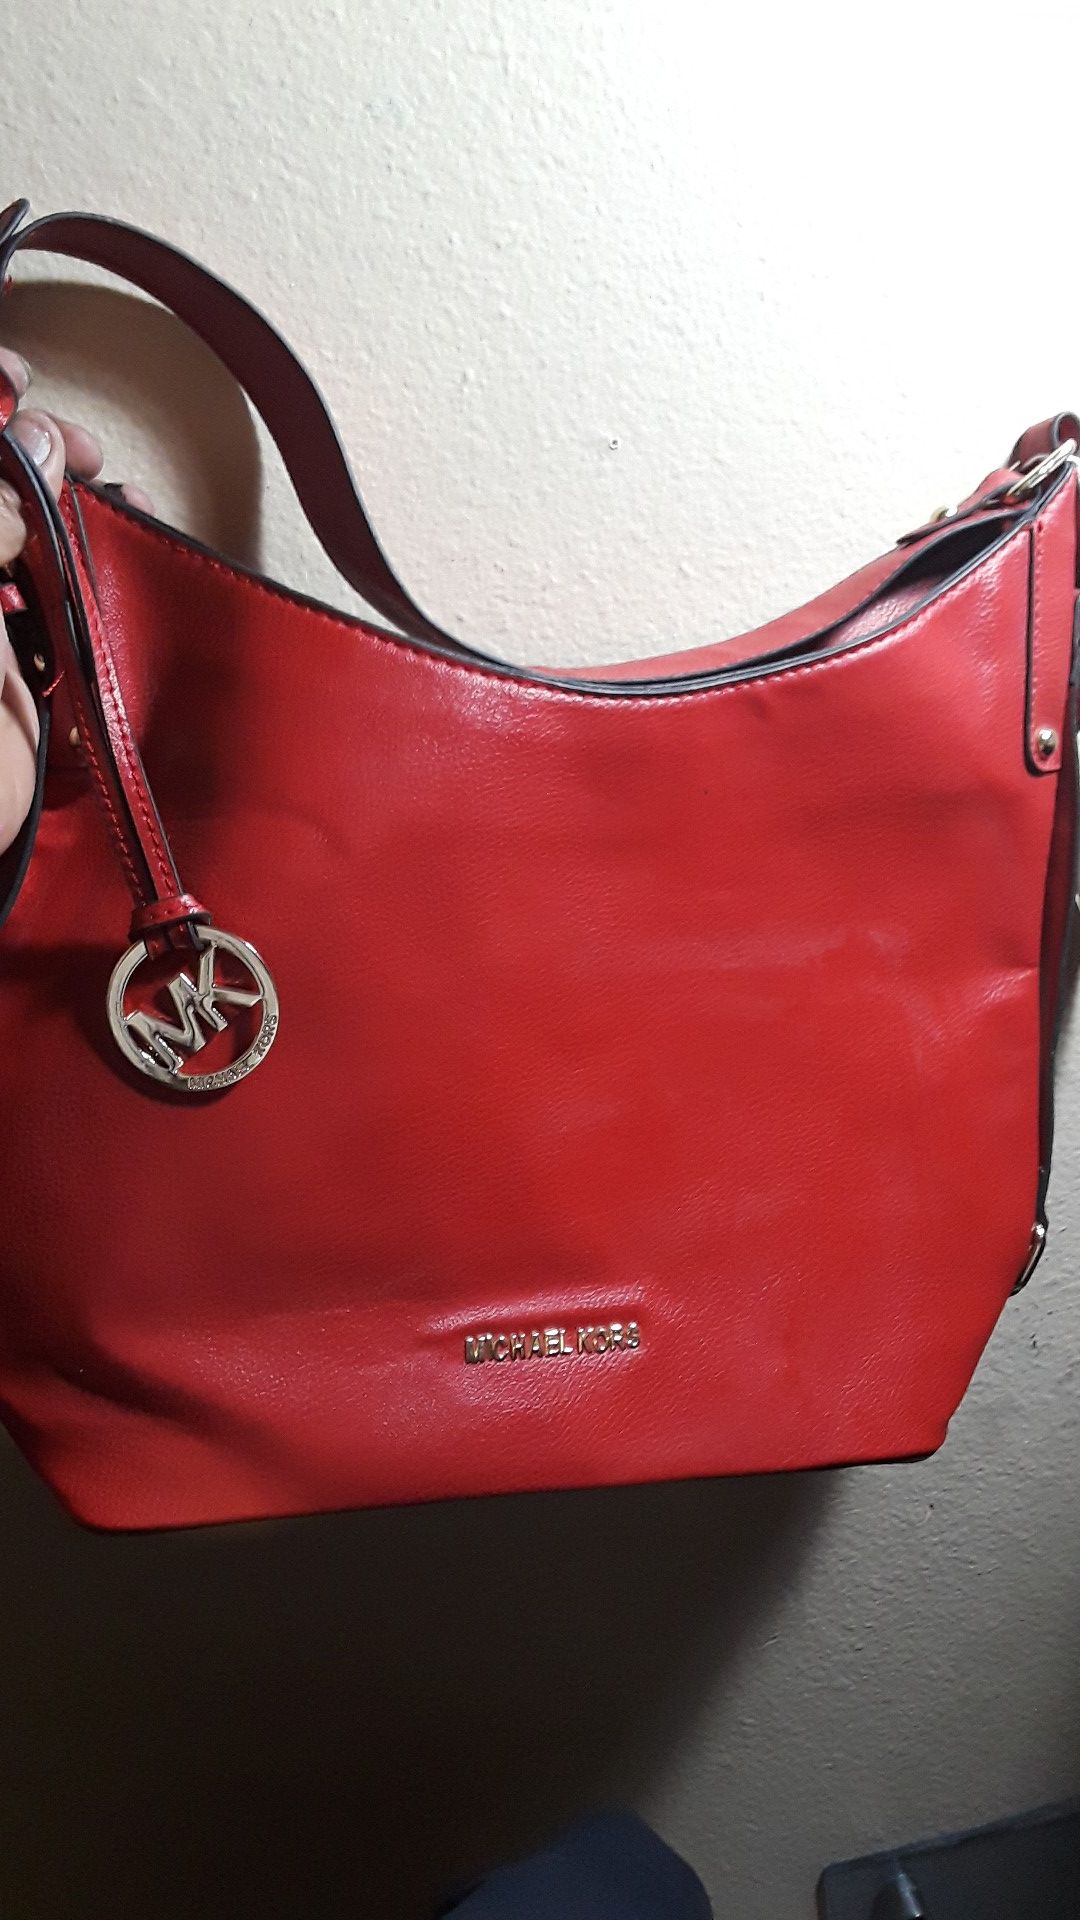 Michael kors hobo bag yes its real .never {url removed}. she didnt like the color 150 obo